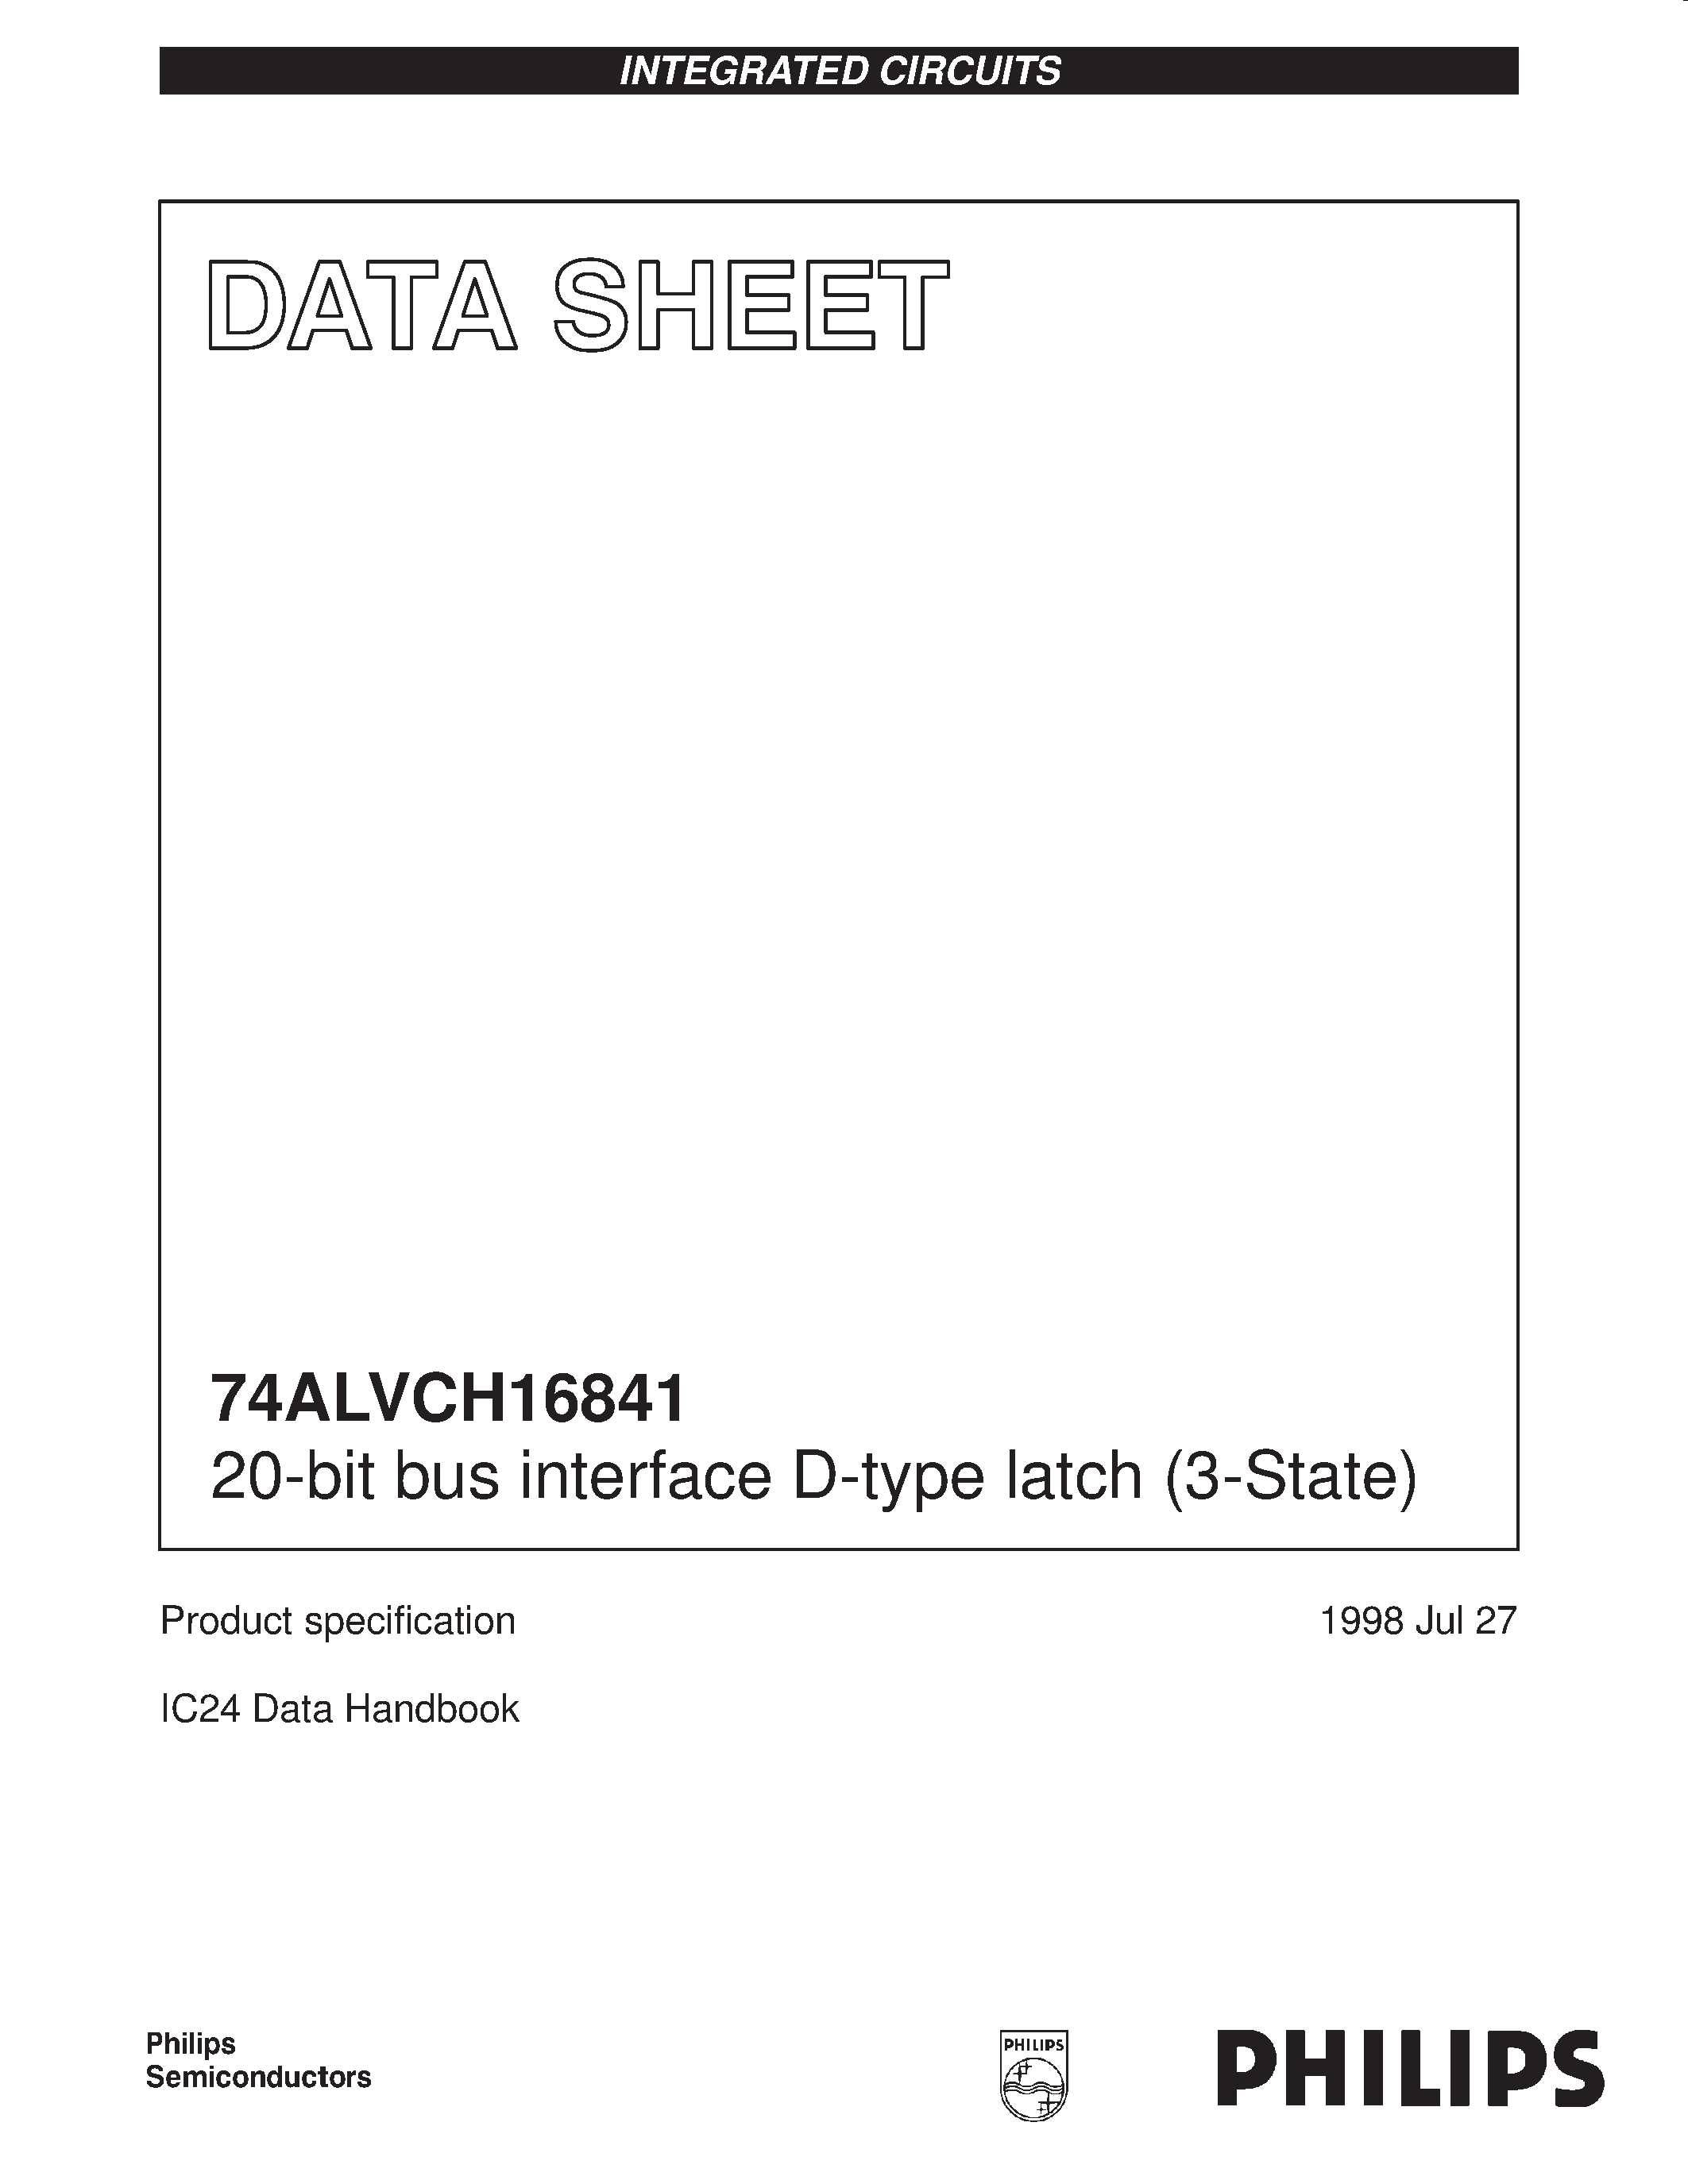 Даташит 74ALVCH16841DGG - 20-bit bus interface D-type latch 3-State страница 1